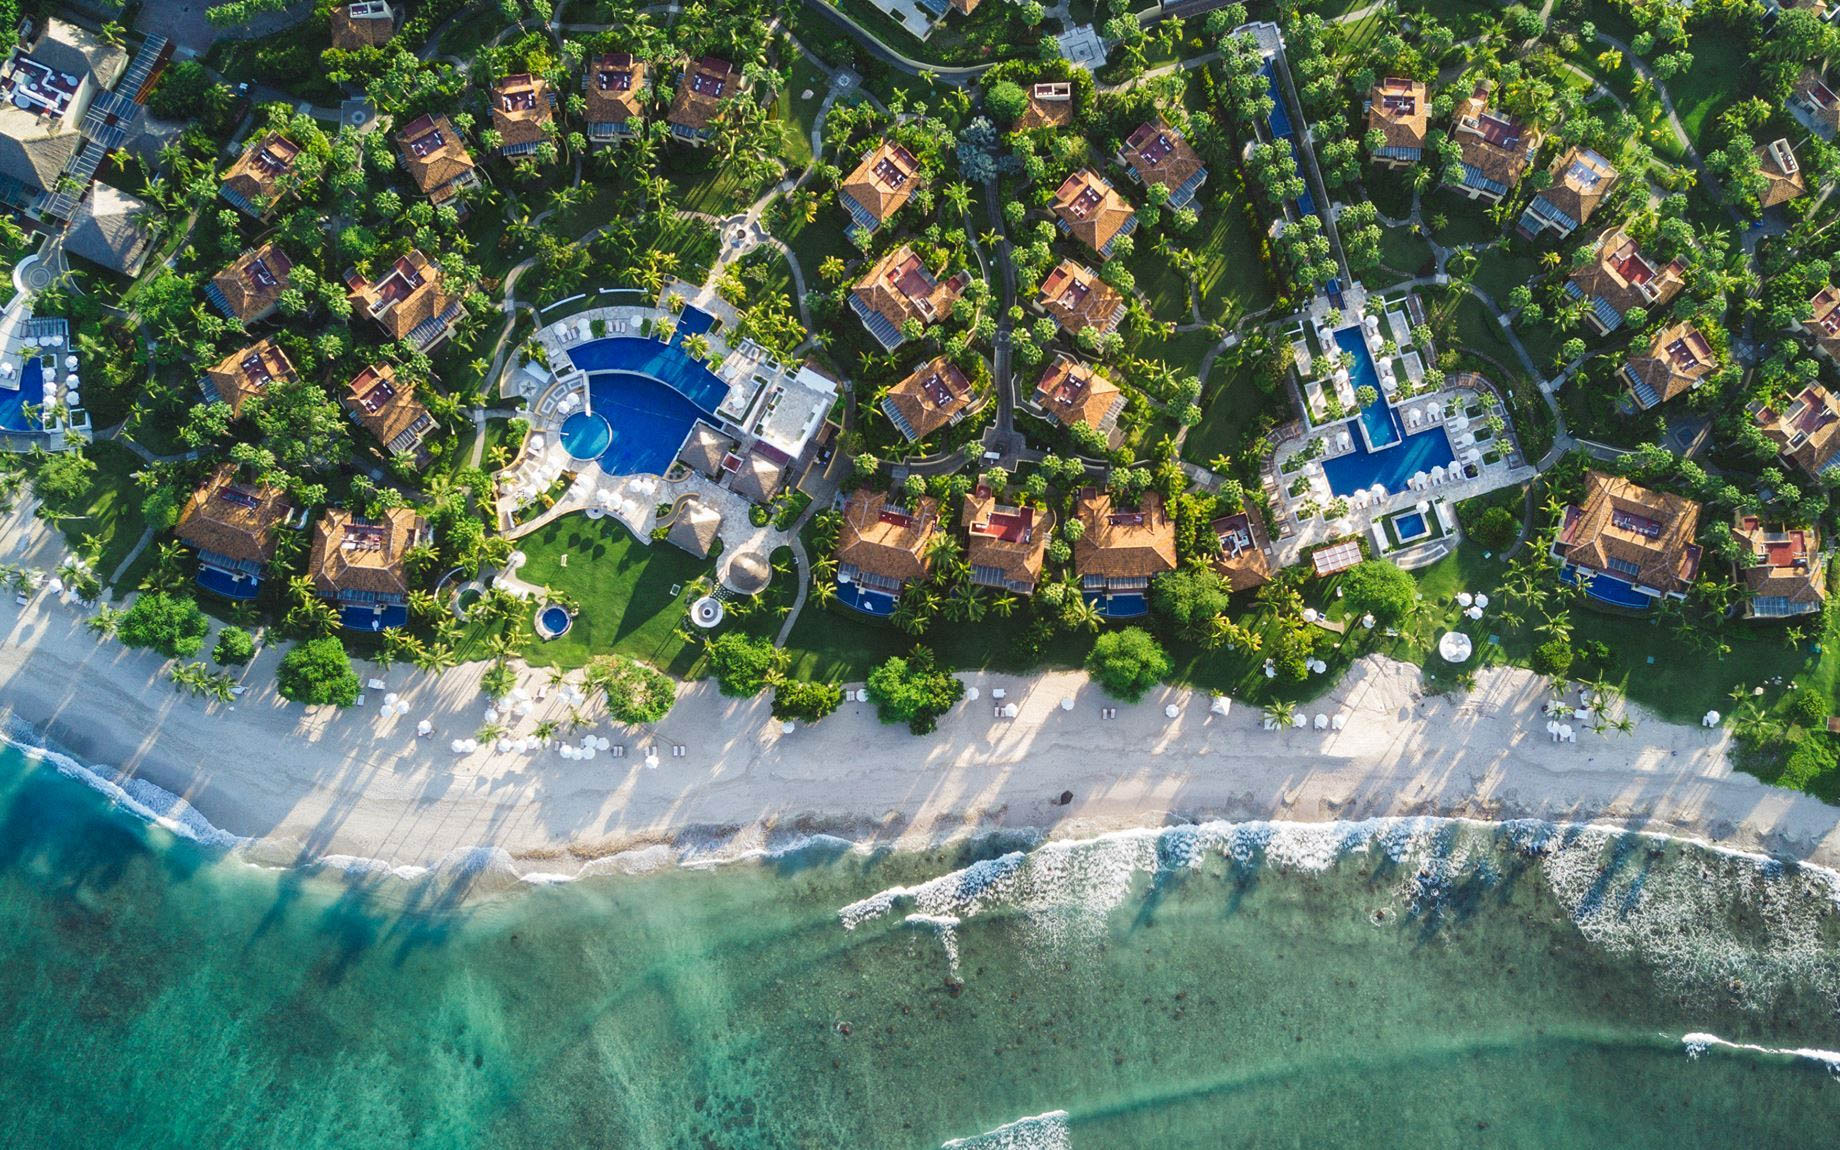 The St. Regis Punta Mita Resort - Nayarit, Mexico